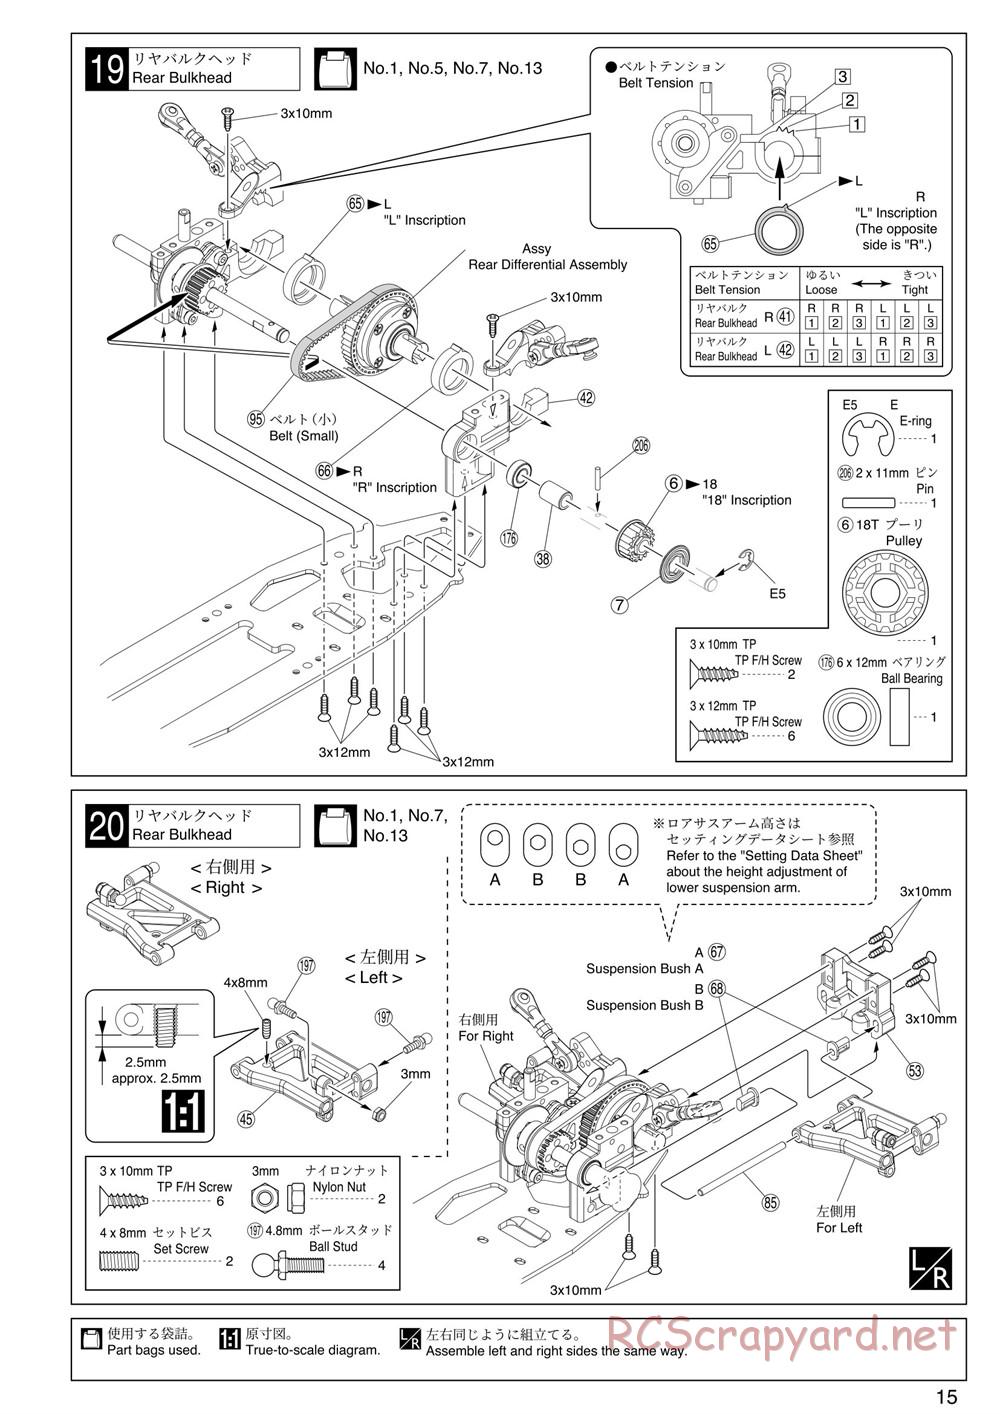 Kyosho - V-One RRR Evo - Manual - Page 15